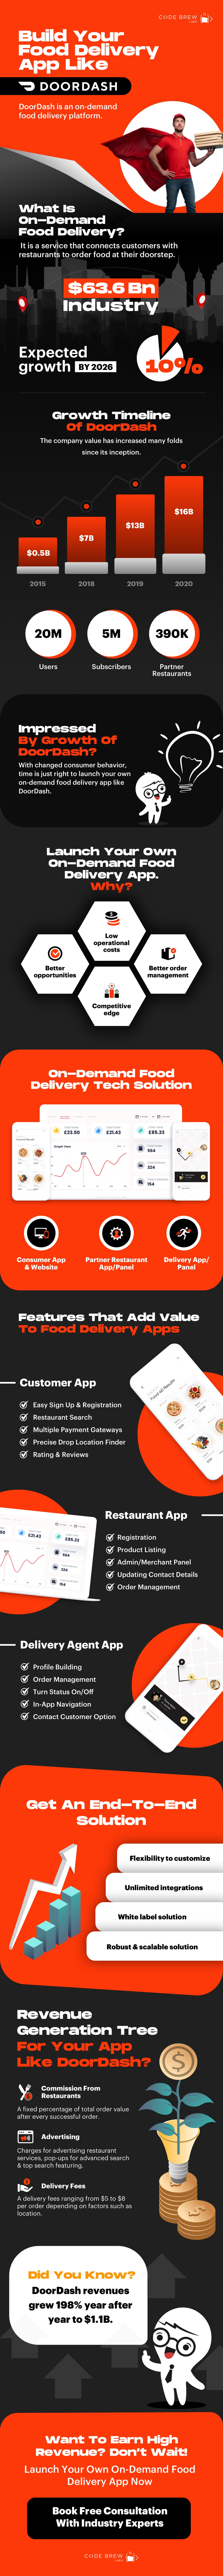 Build on-demand food delivery app like DoorDash